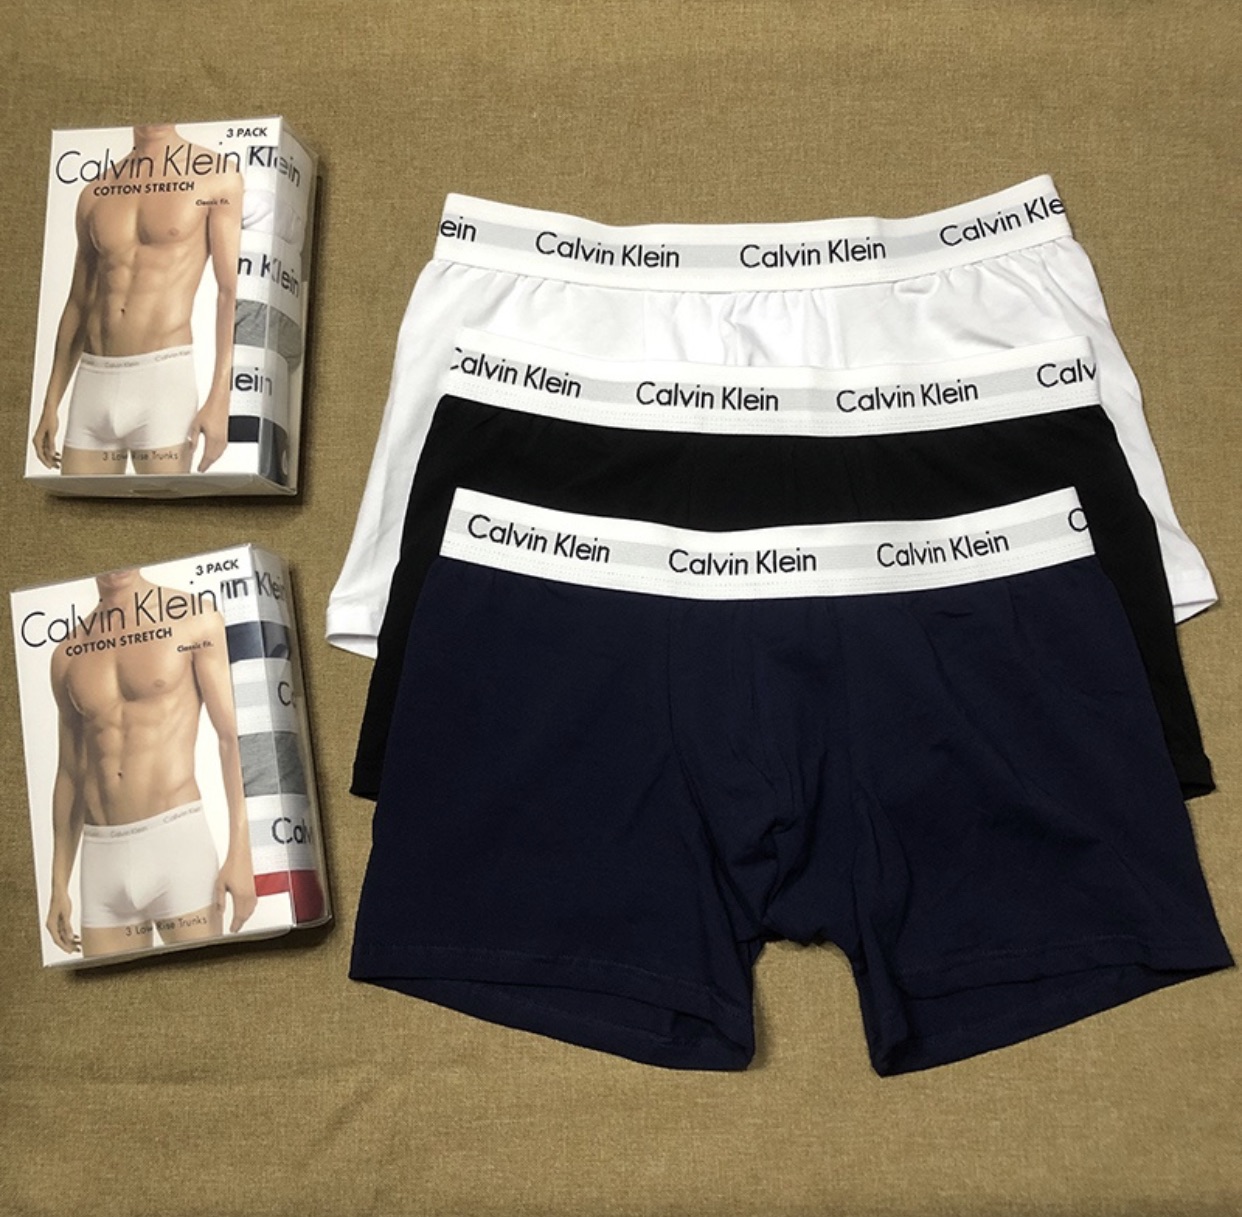 Calvin Klein Cotton Stretch Underwear 3 Pieces Combo For Men 3 Color ...